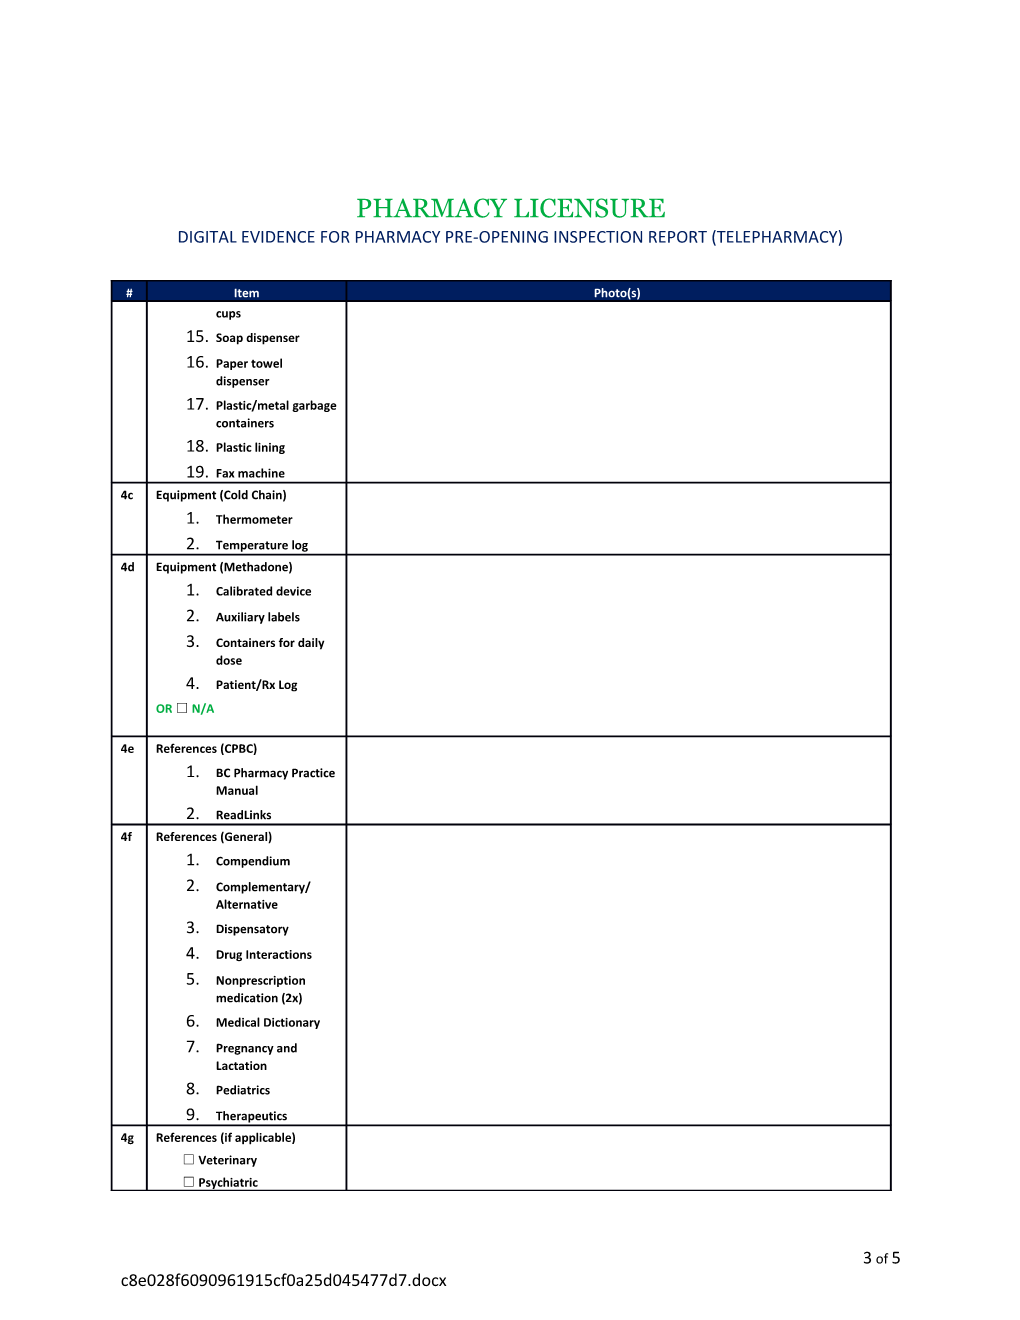 Digital Evidence for Pharmacy Pre-Opening Inspection Report (Telepharmacy)